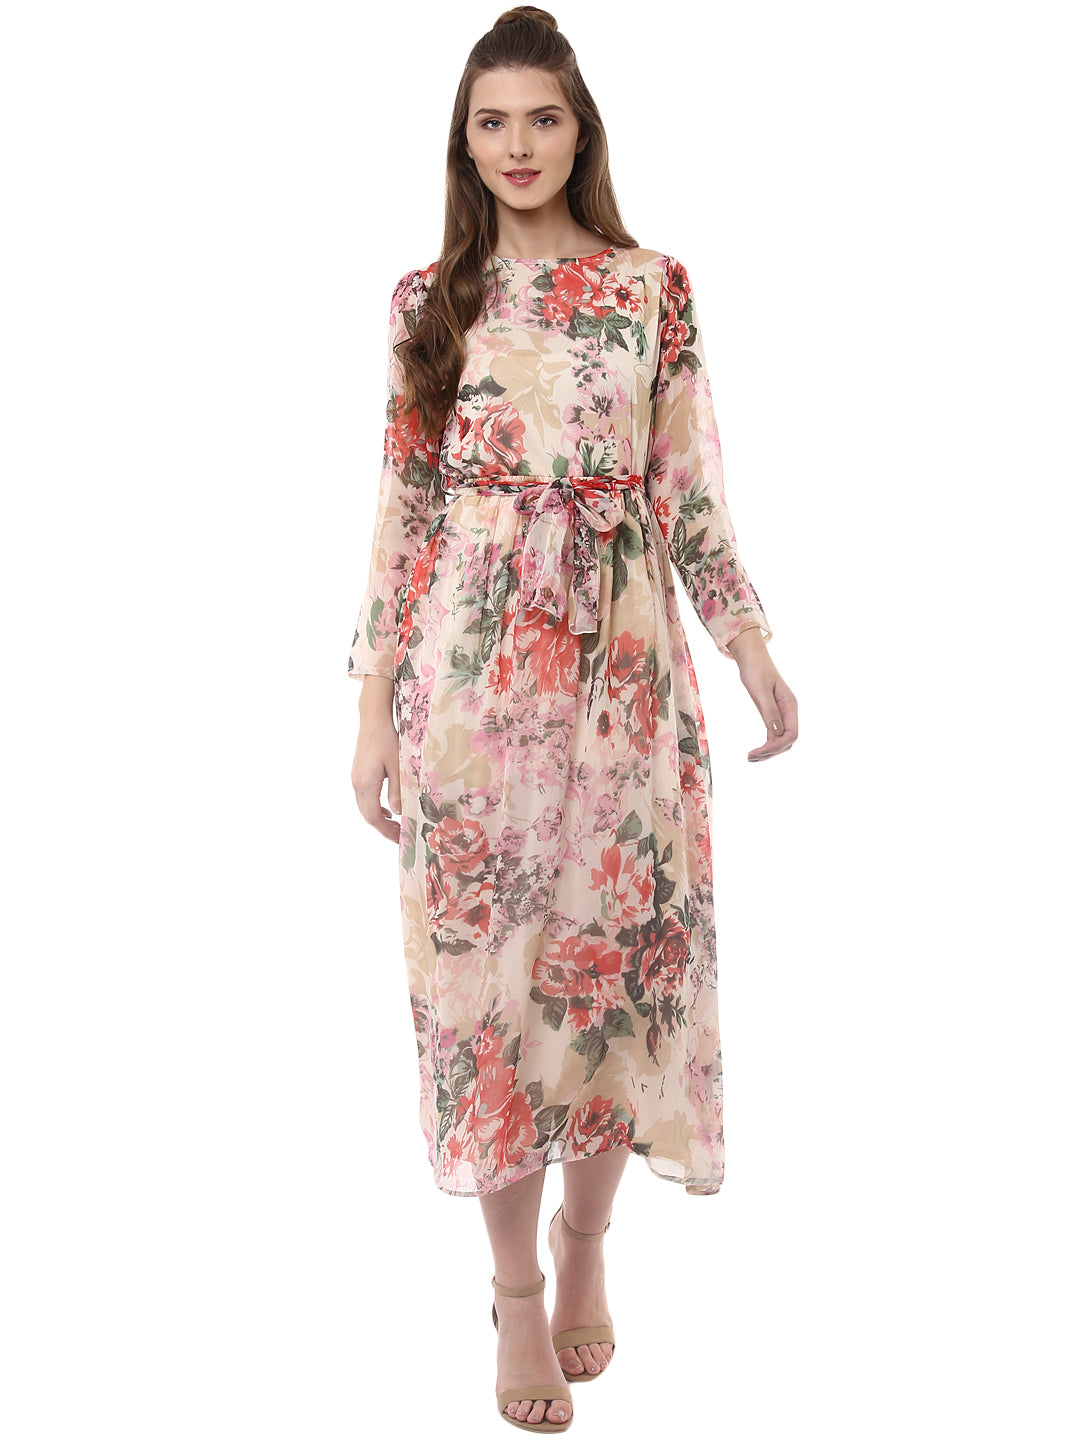 Women's Floral Chiffon Dress with Belt - StyleStone